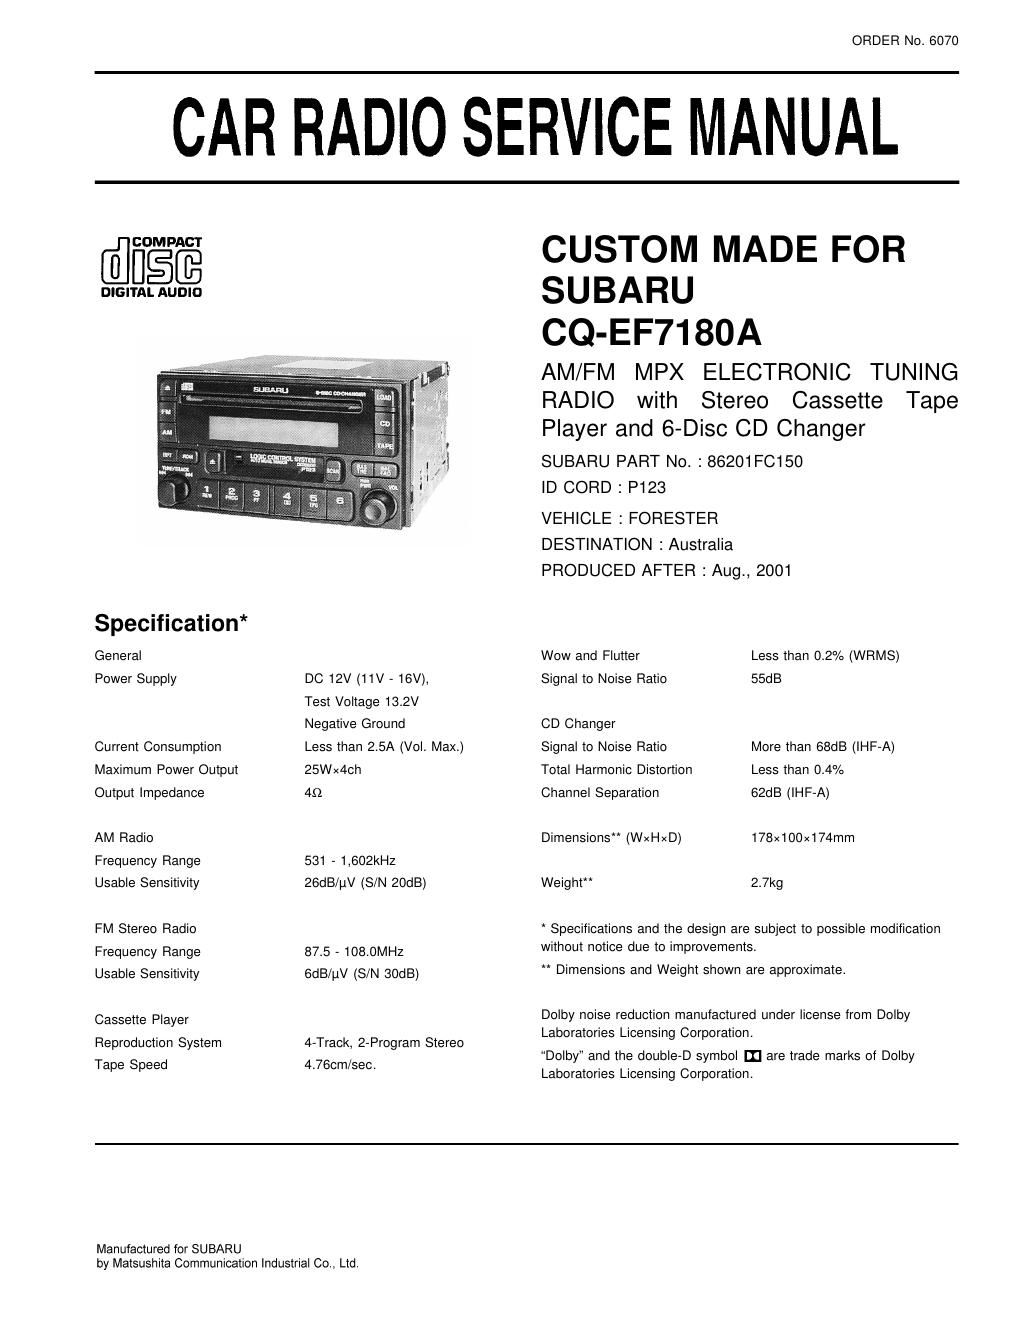 panasonic cq ef 7180 a service manual